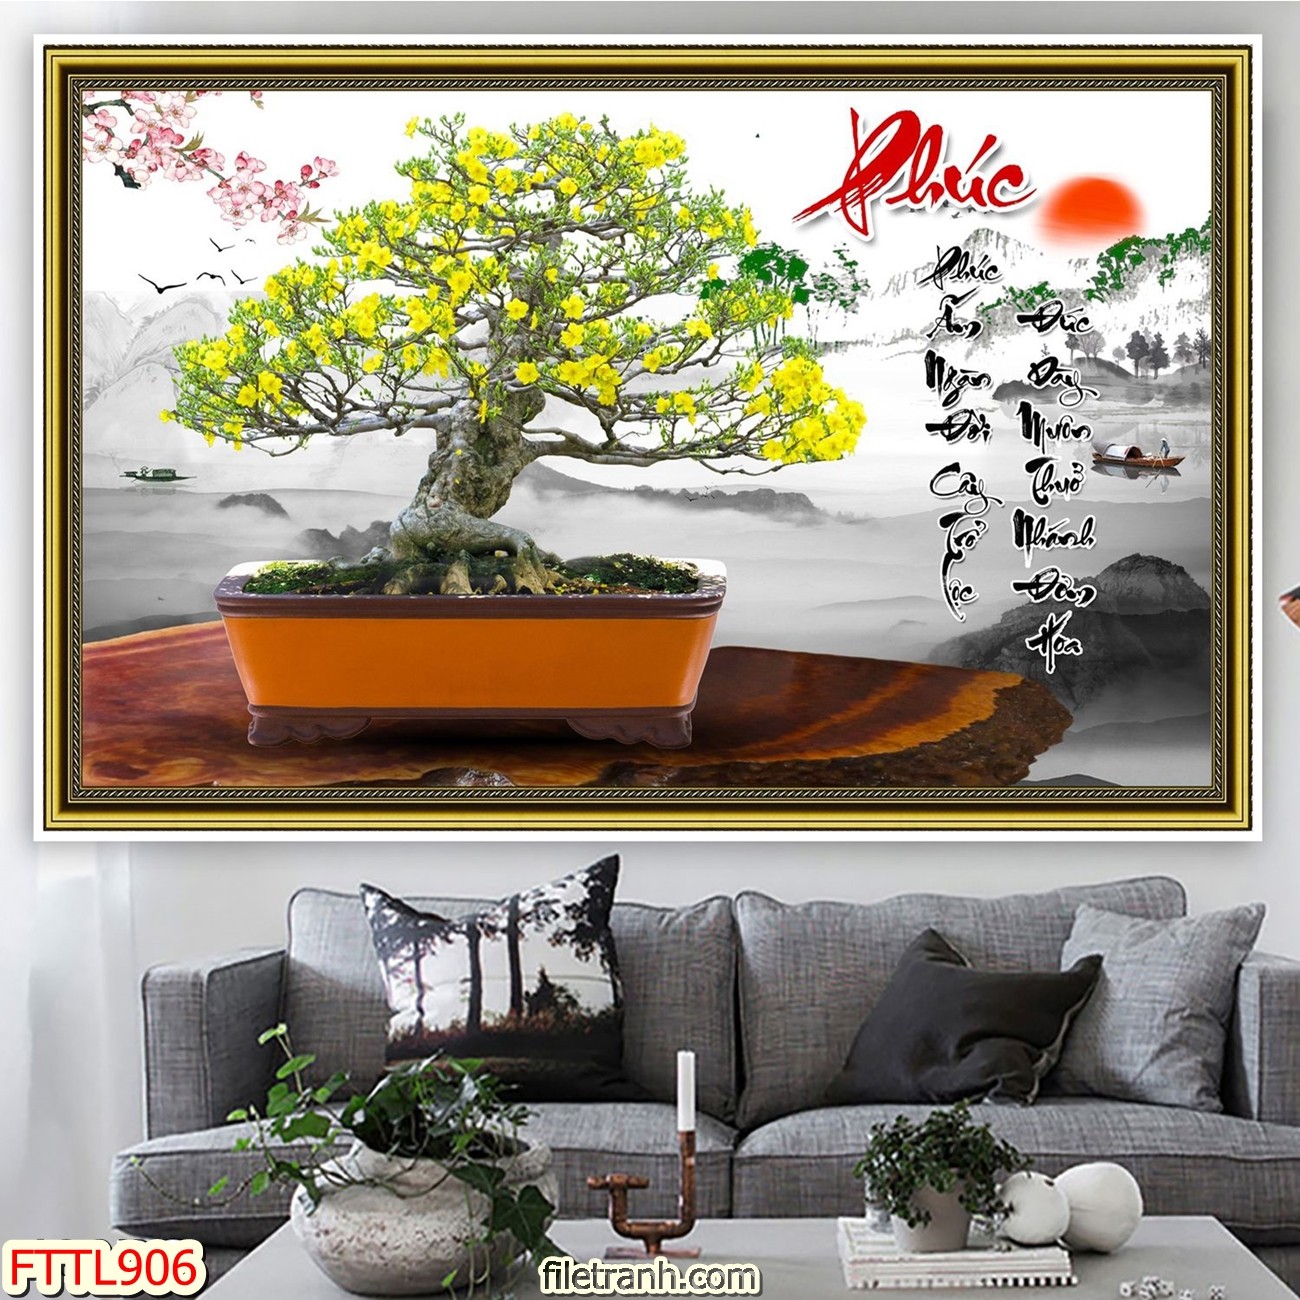 http://filetranh.com/file-tranh-chau-mai-bonsai/file-tranh-chau-mai-bonsai-fttl906.html